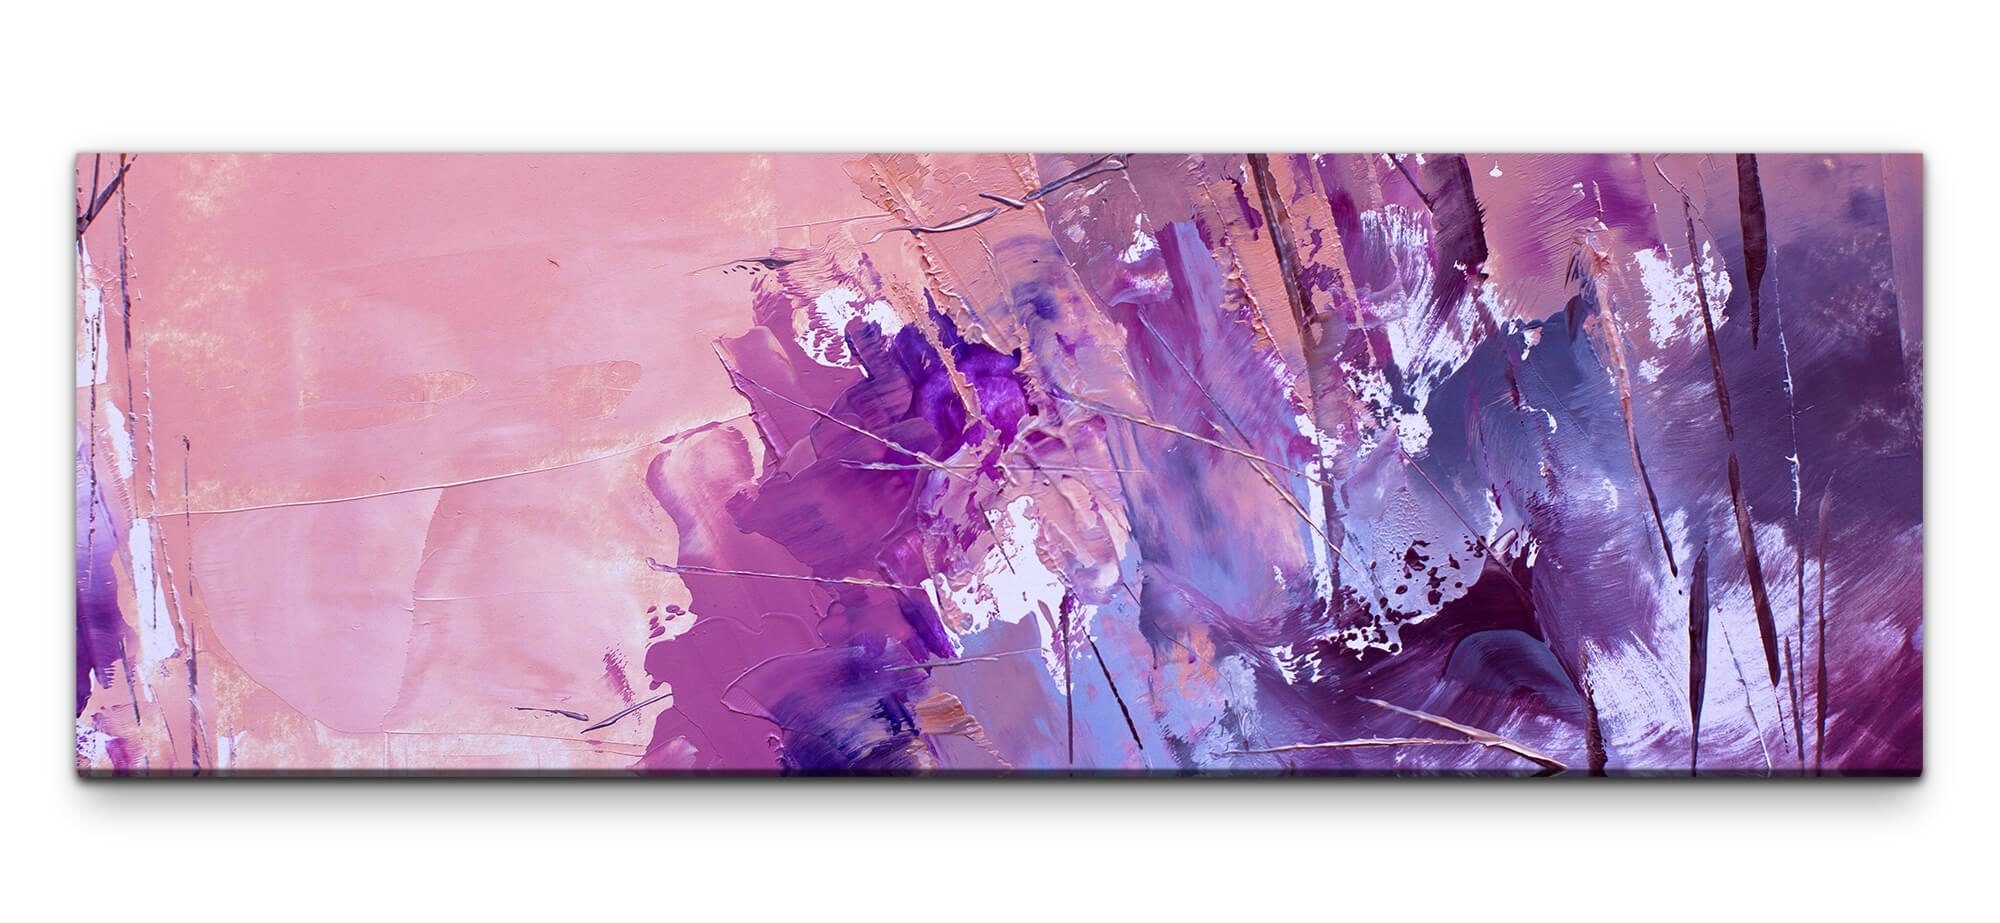 möbel-direkt.de Leinwandbild Bilder XXL Abstrakt in lila Wandbild auf Leinwand